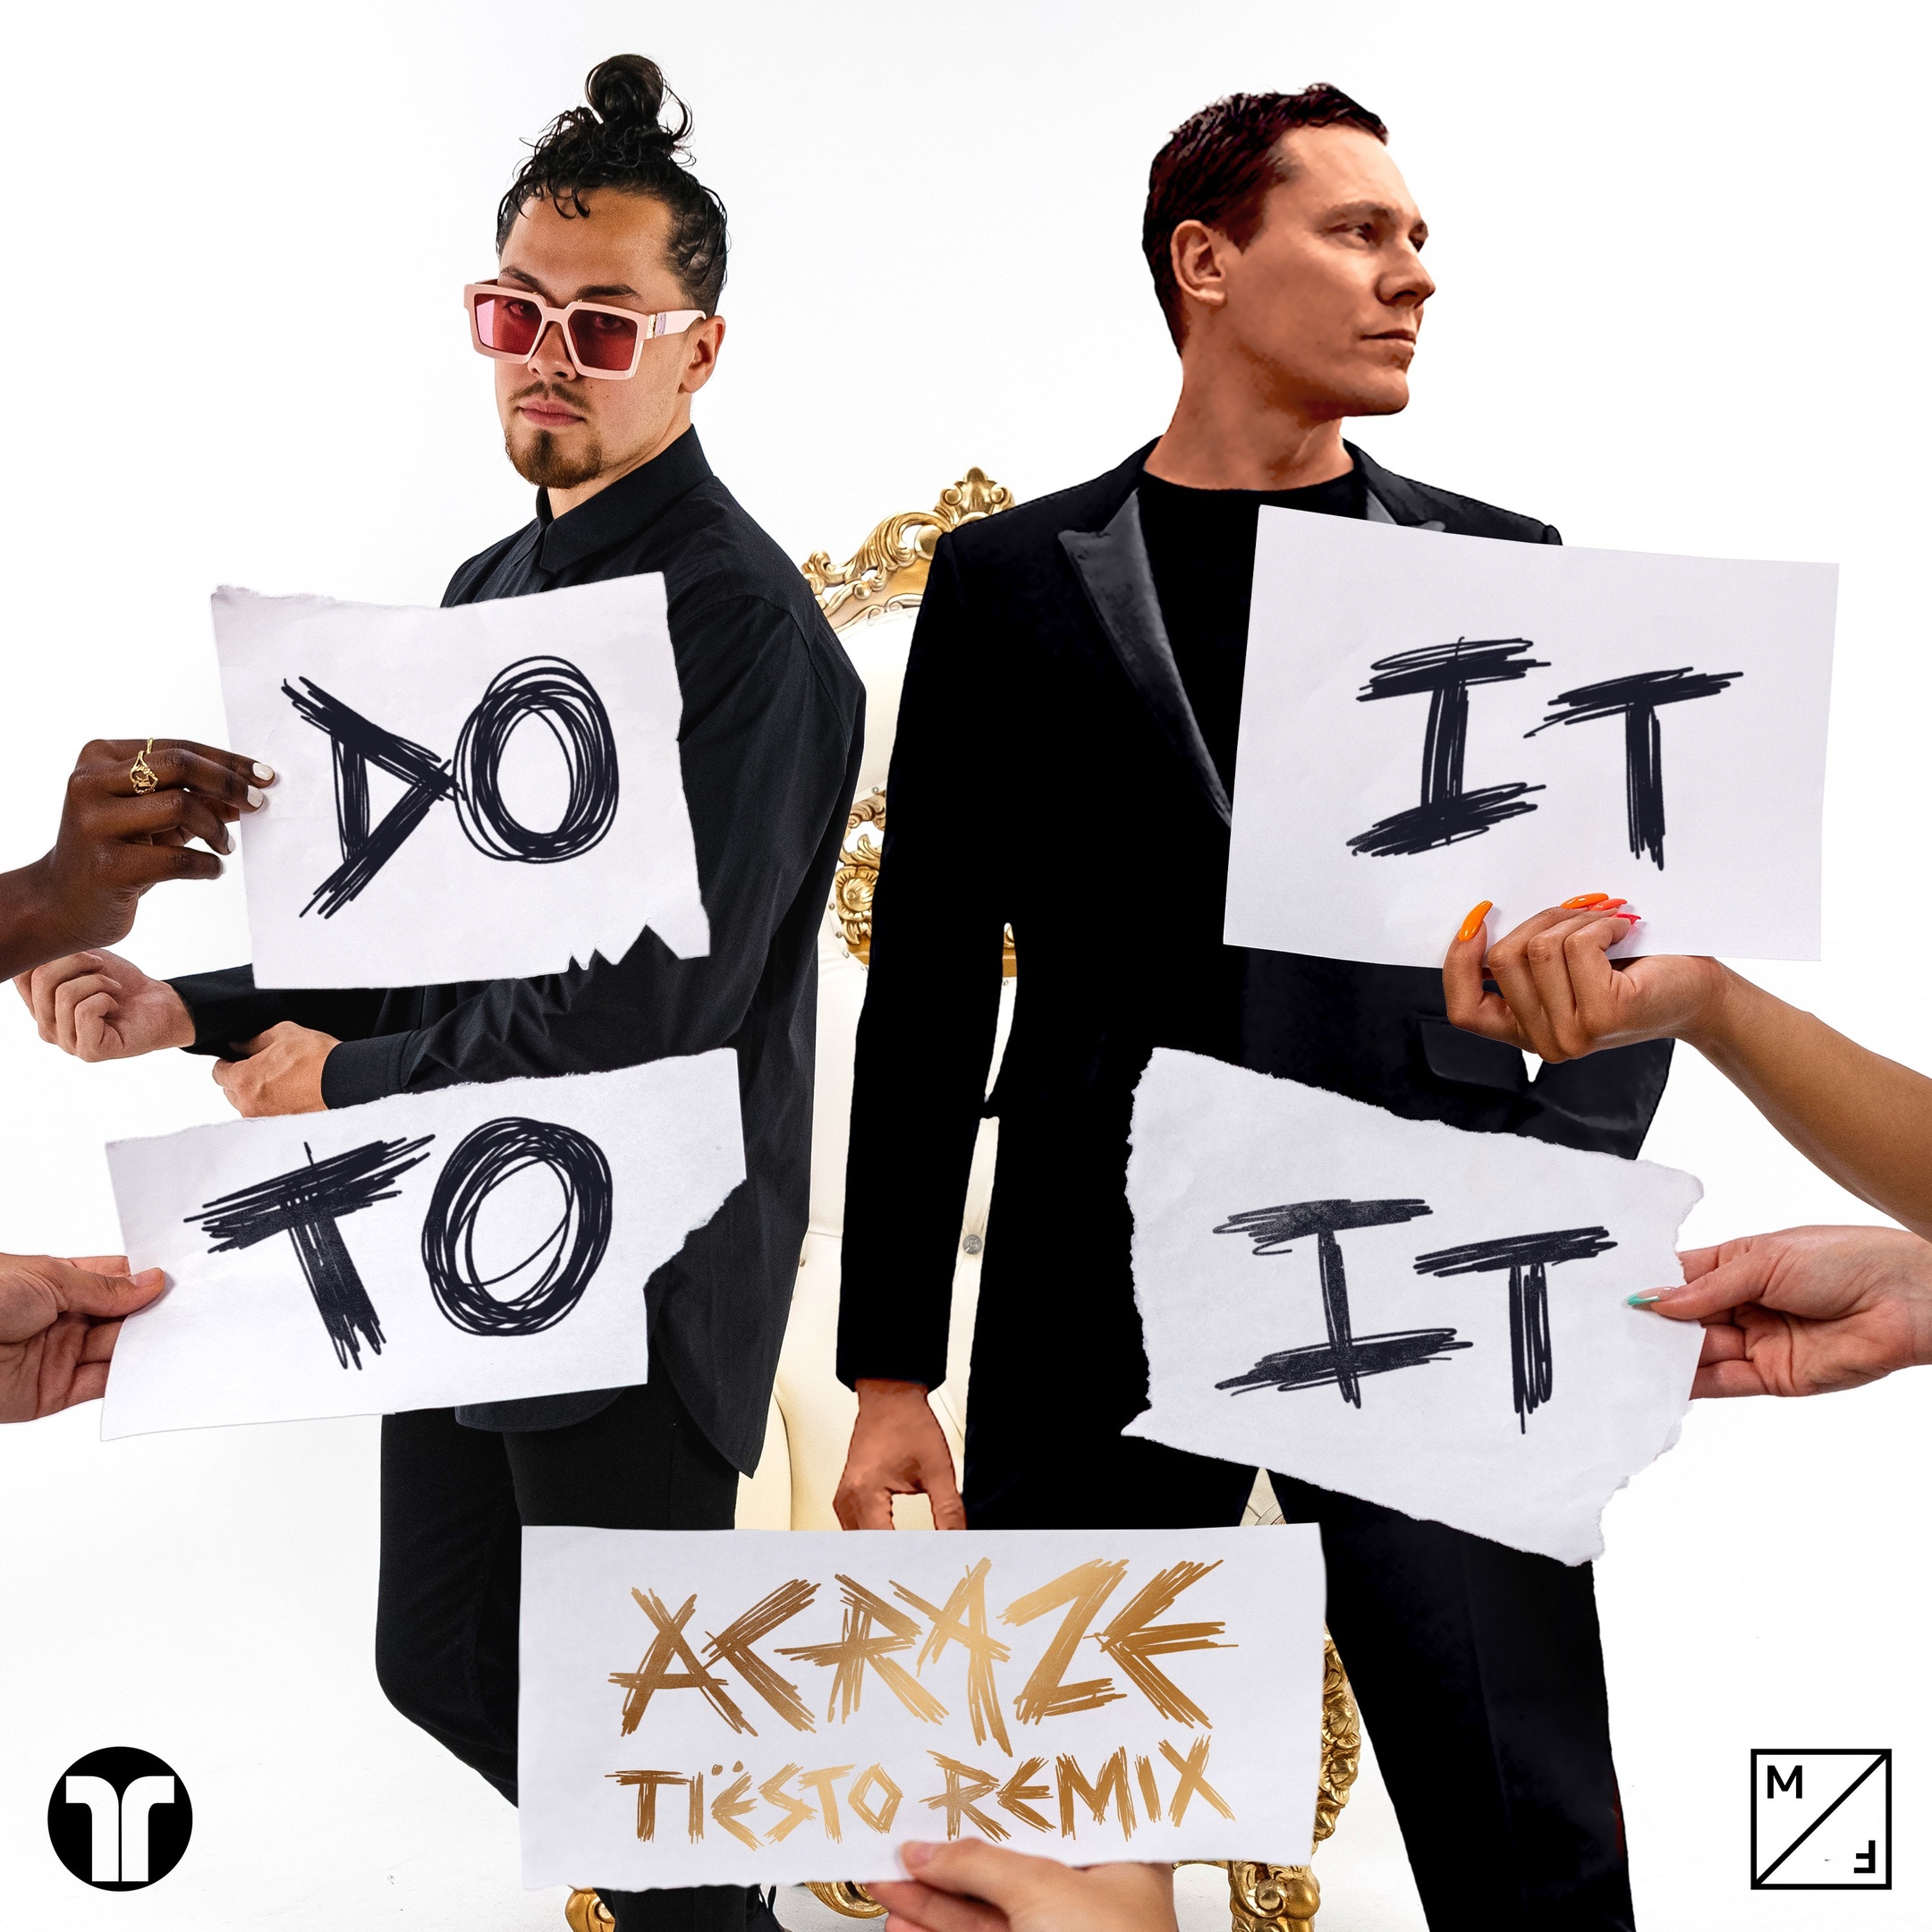 Acraze feat. Cherish - Do It To It (Tiësto Extended Remix)